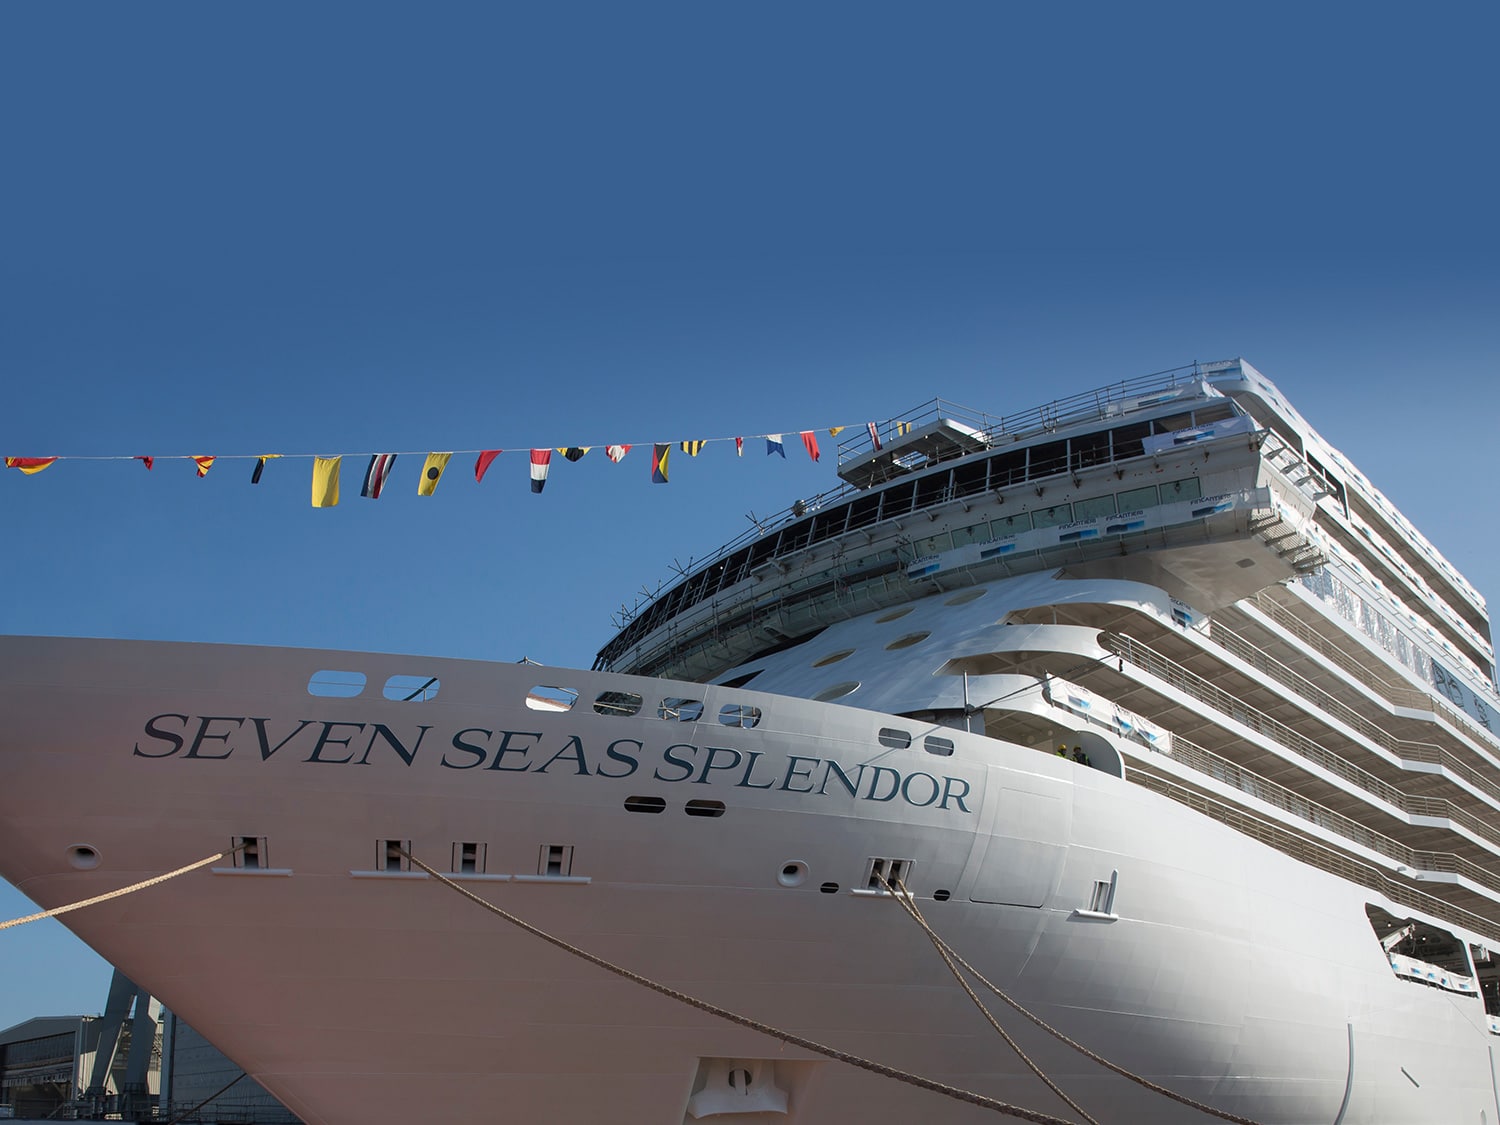 The exterior of the Regent Seven Seas Splendor cruise ship.